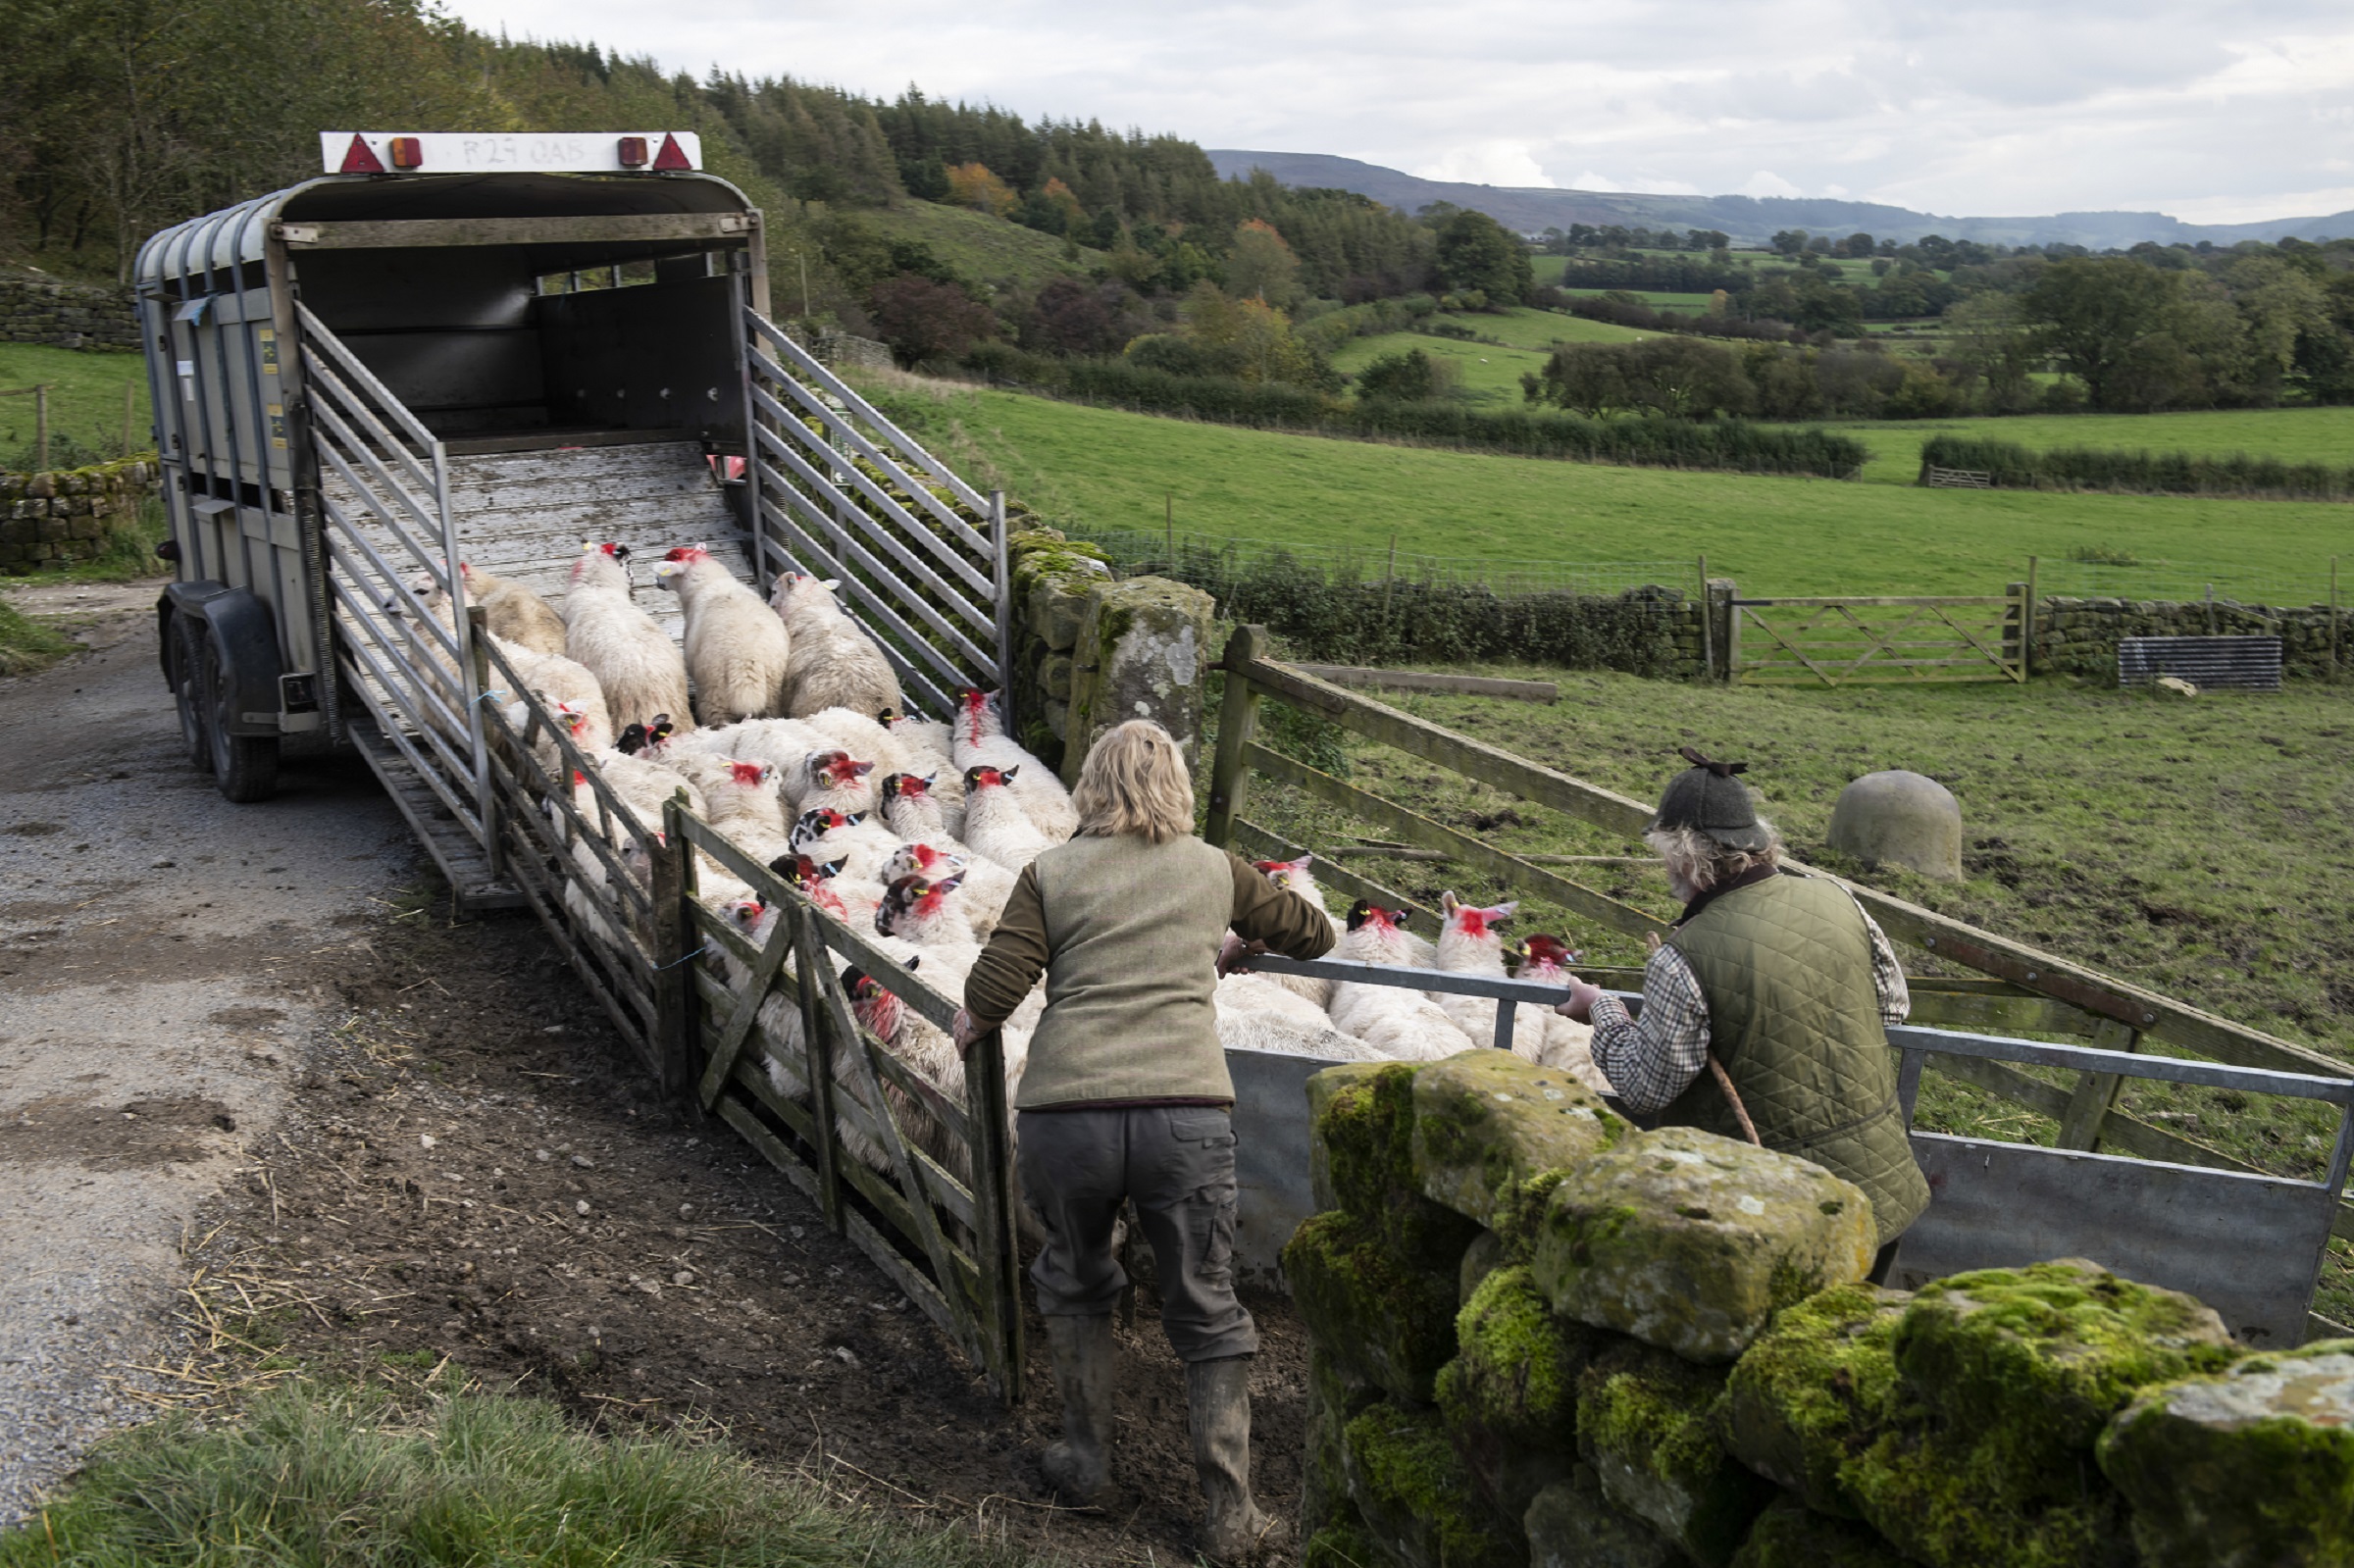 Sheep farmers loading sheep into a trailer